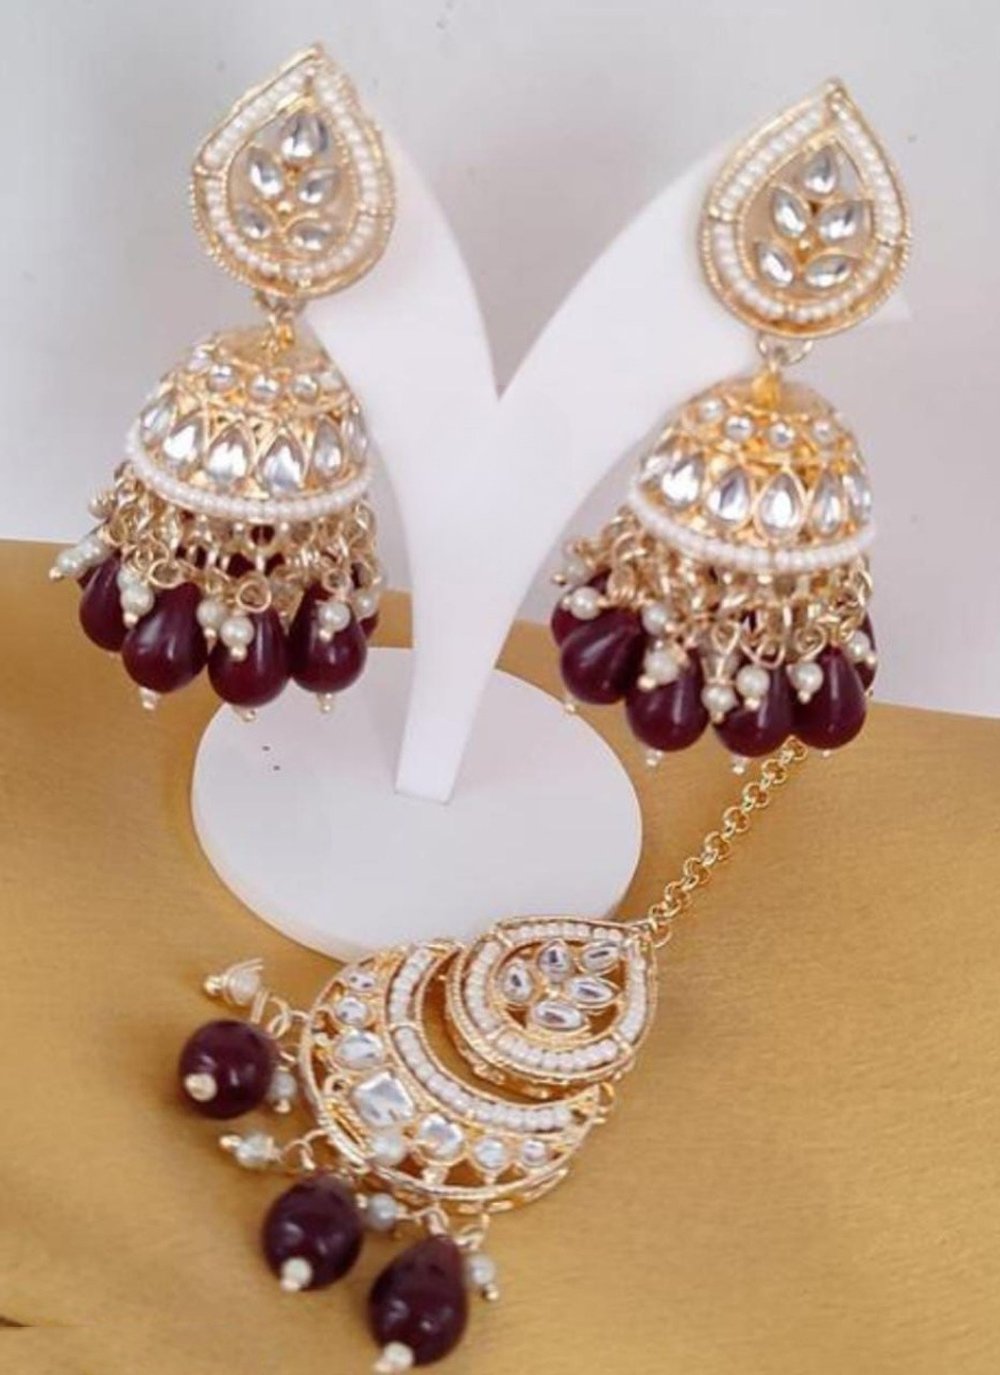 Talismanic Alloy Beads Work Gold Rodium Polish Earrings Set